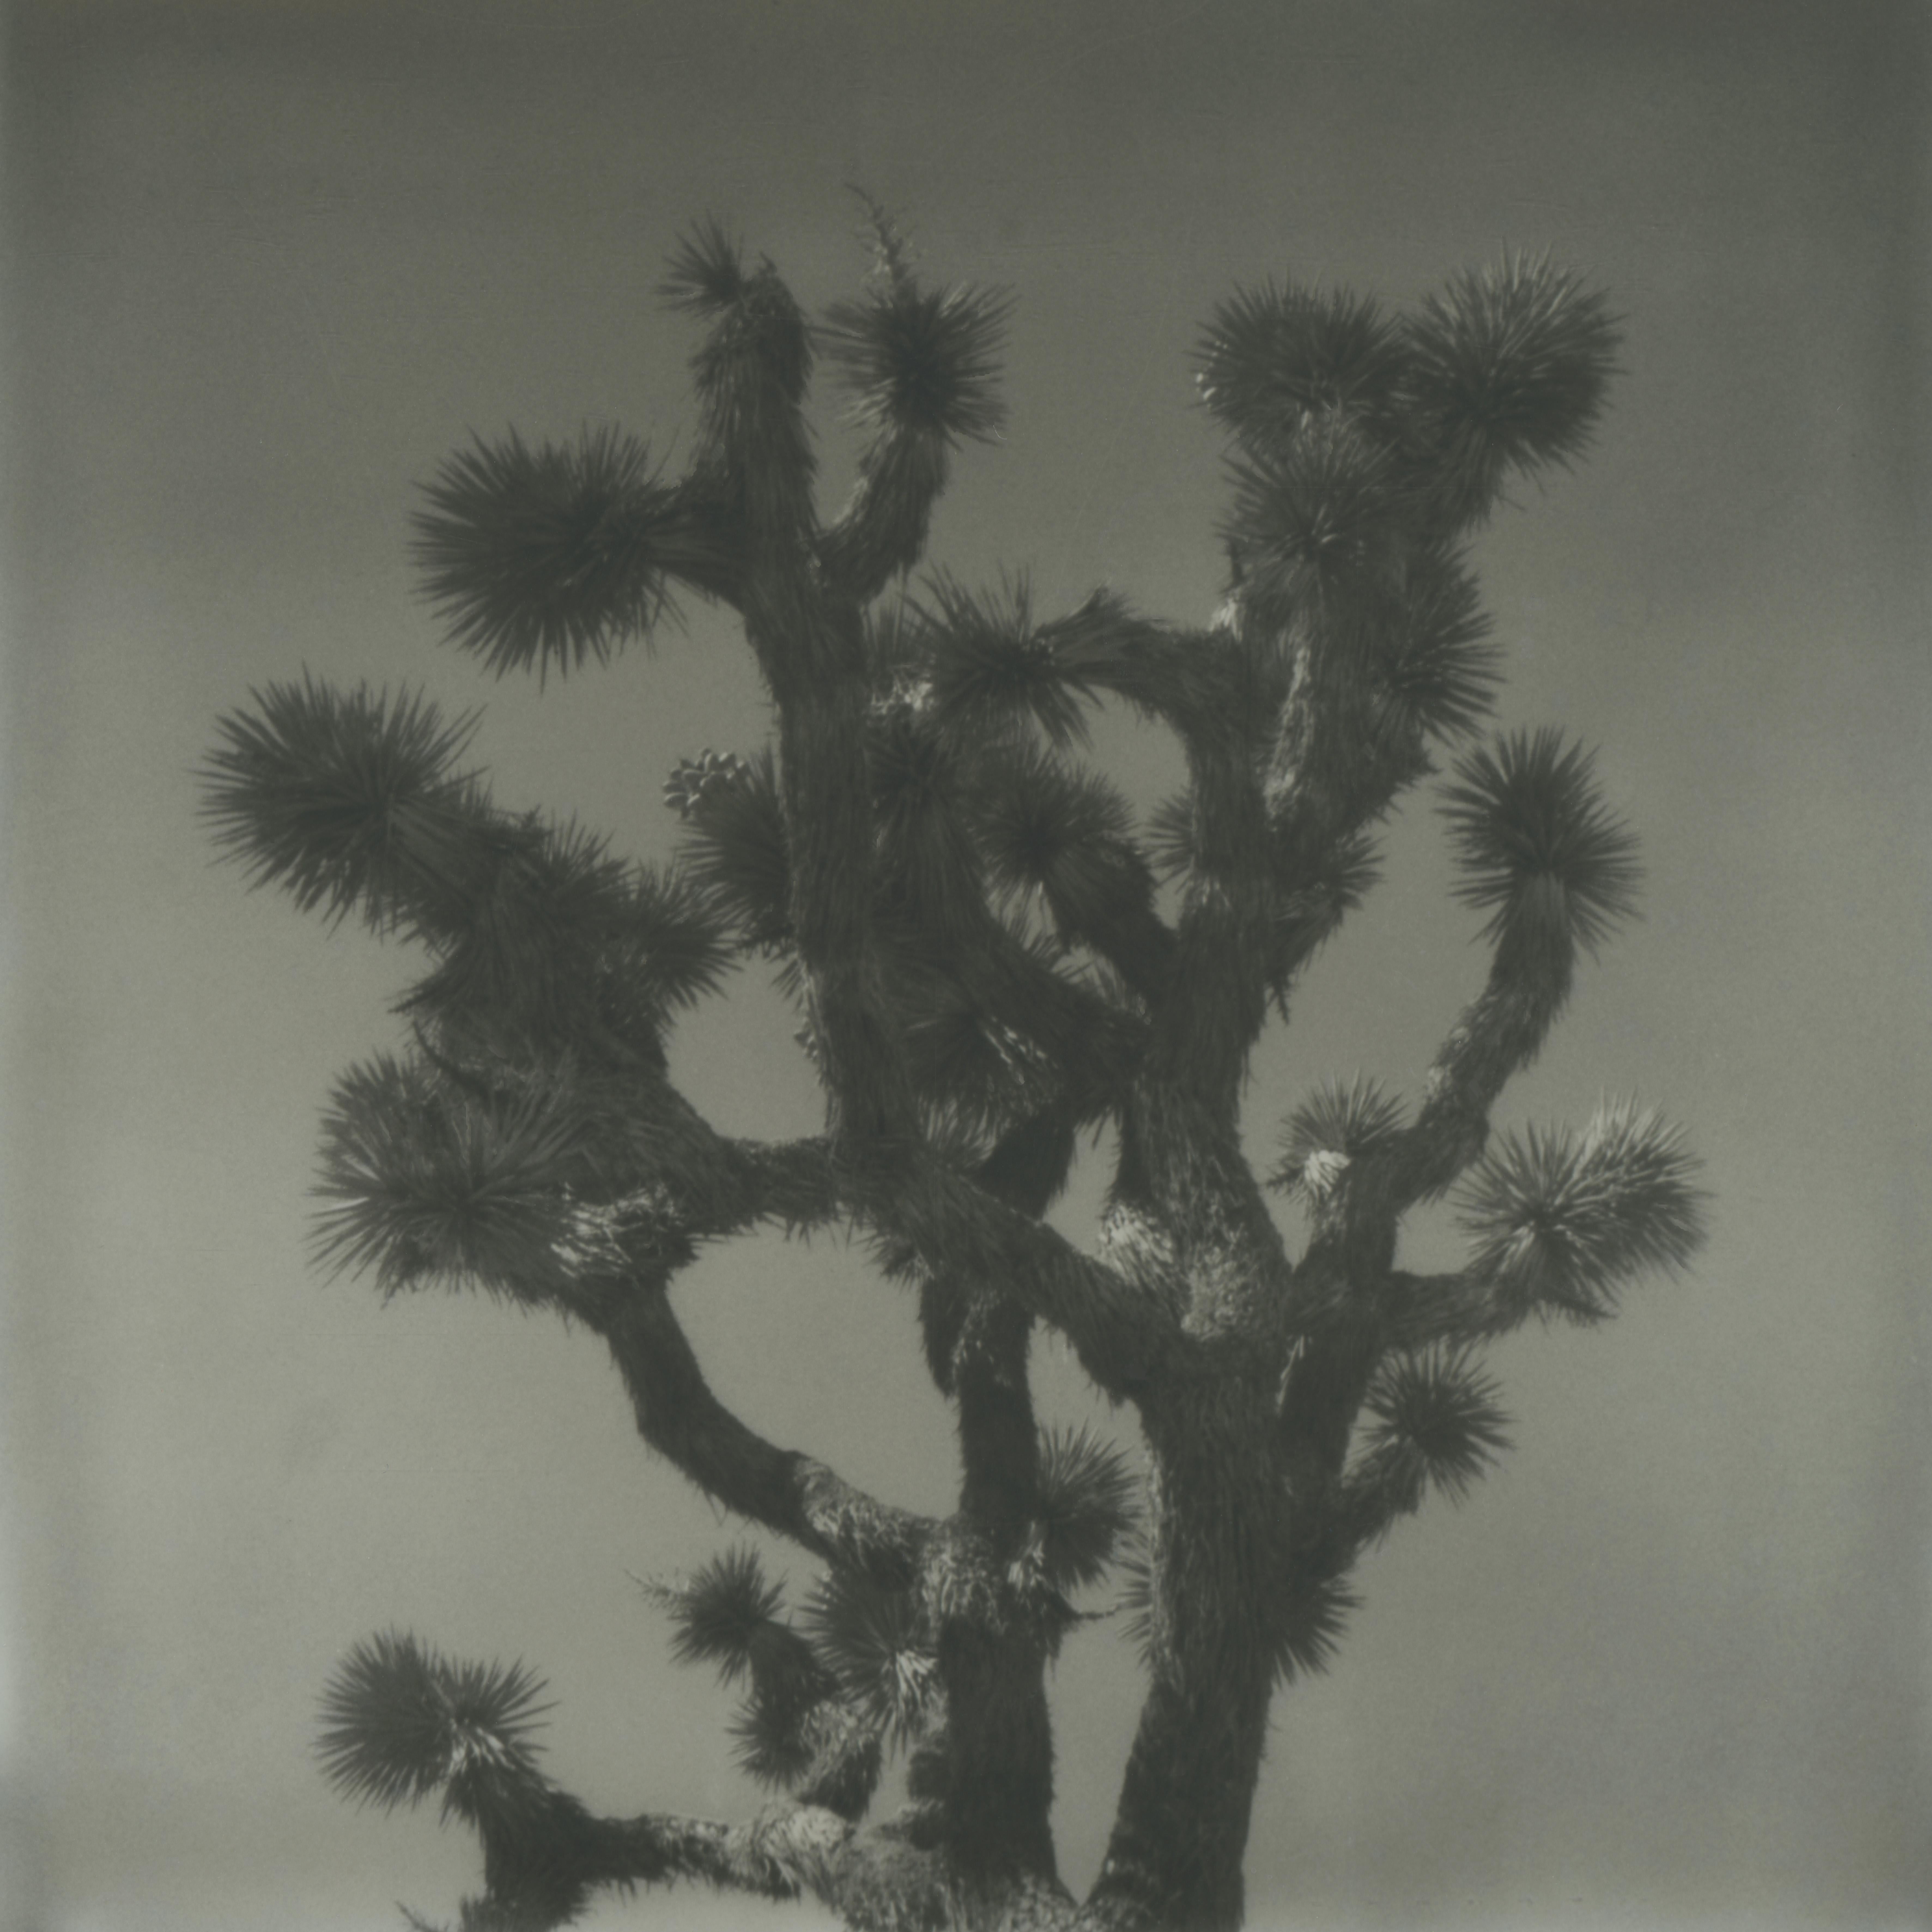 Erin Dougherty Landscape Photograph - The Elder (Joshua Tree) - 21st Century, Polaroid, Landscape